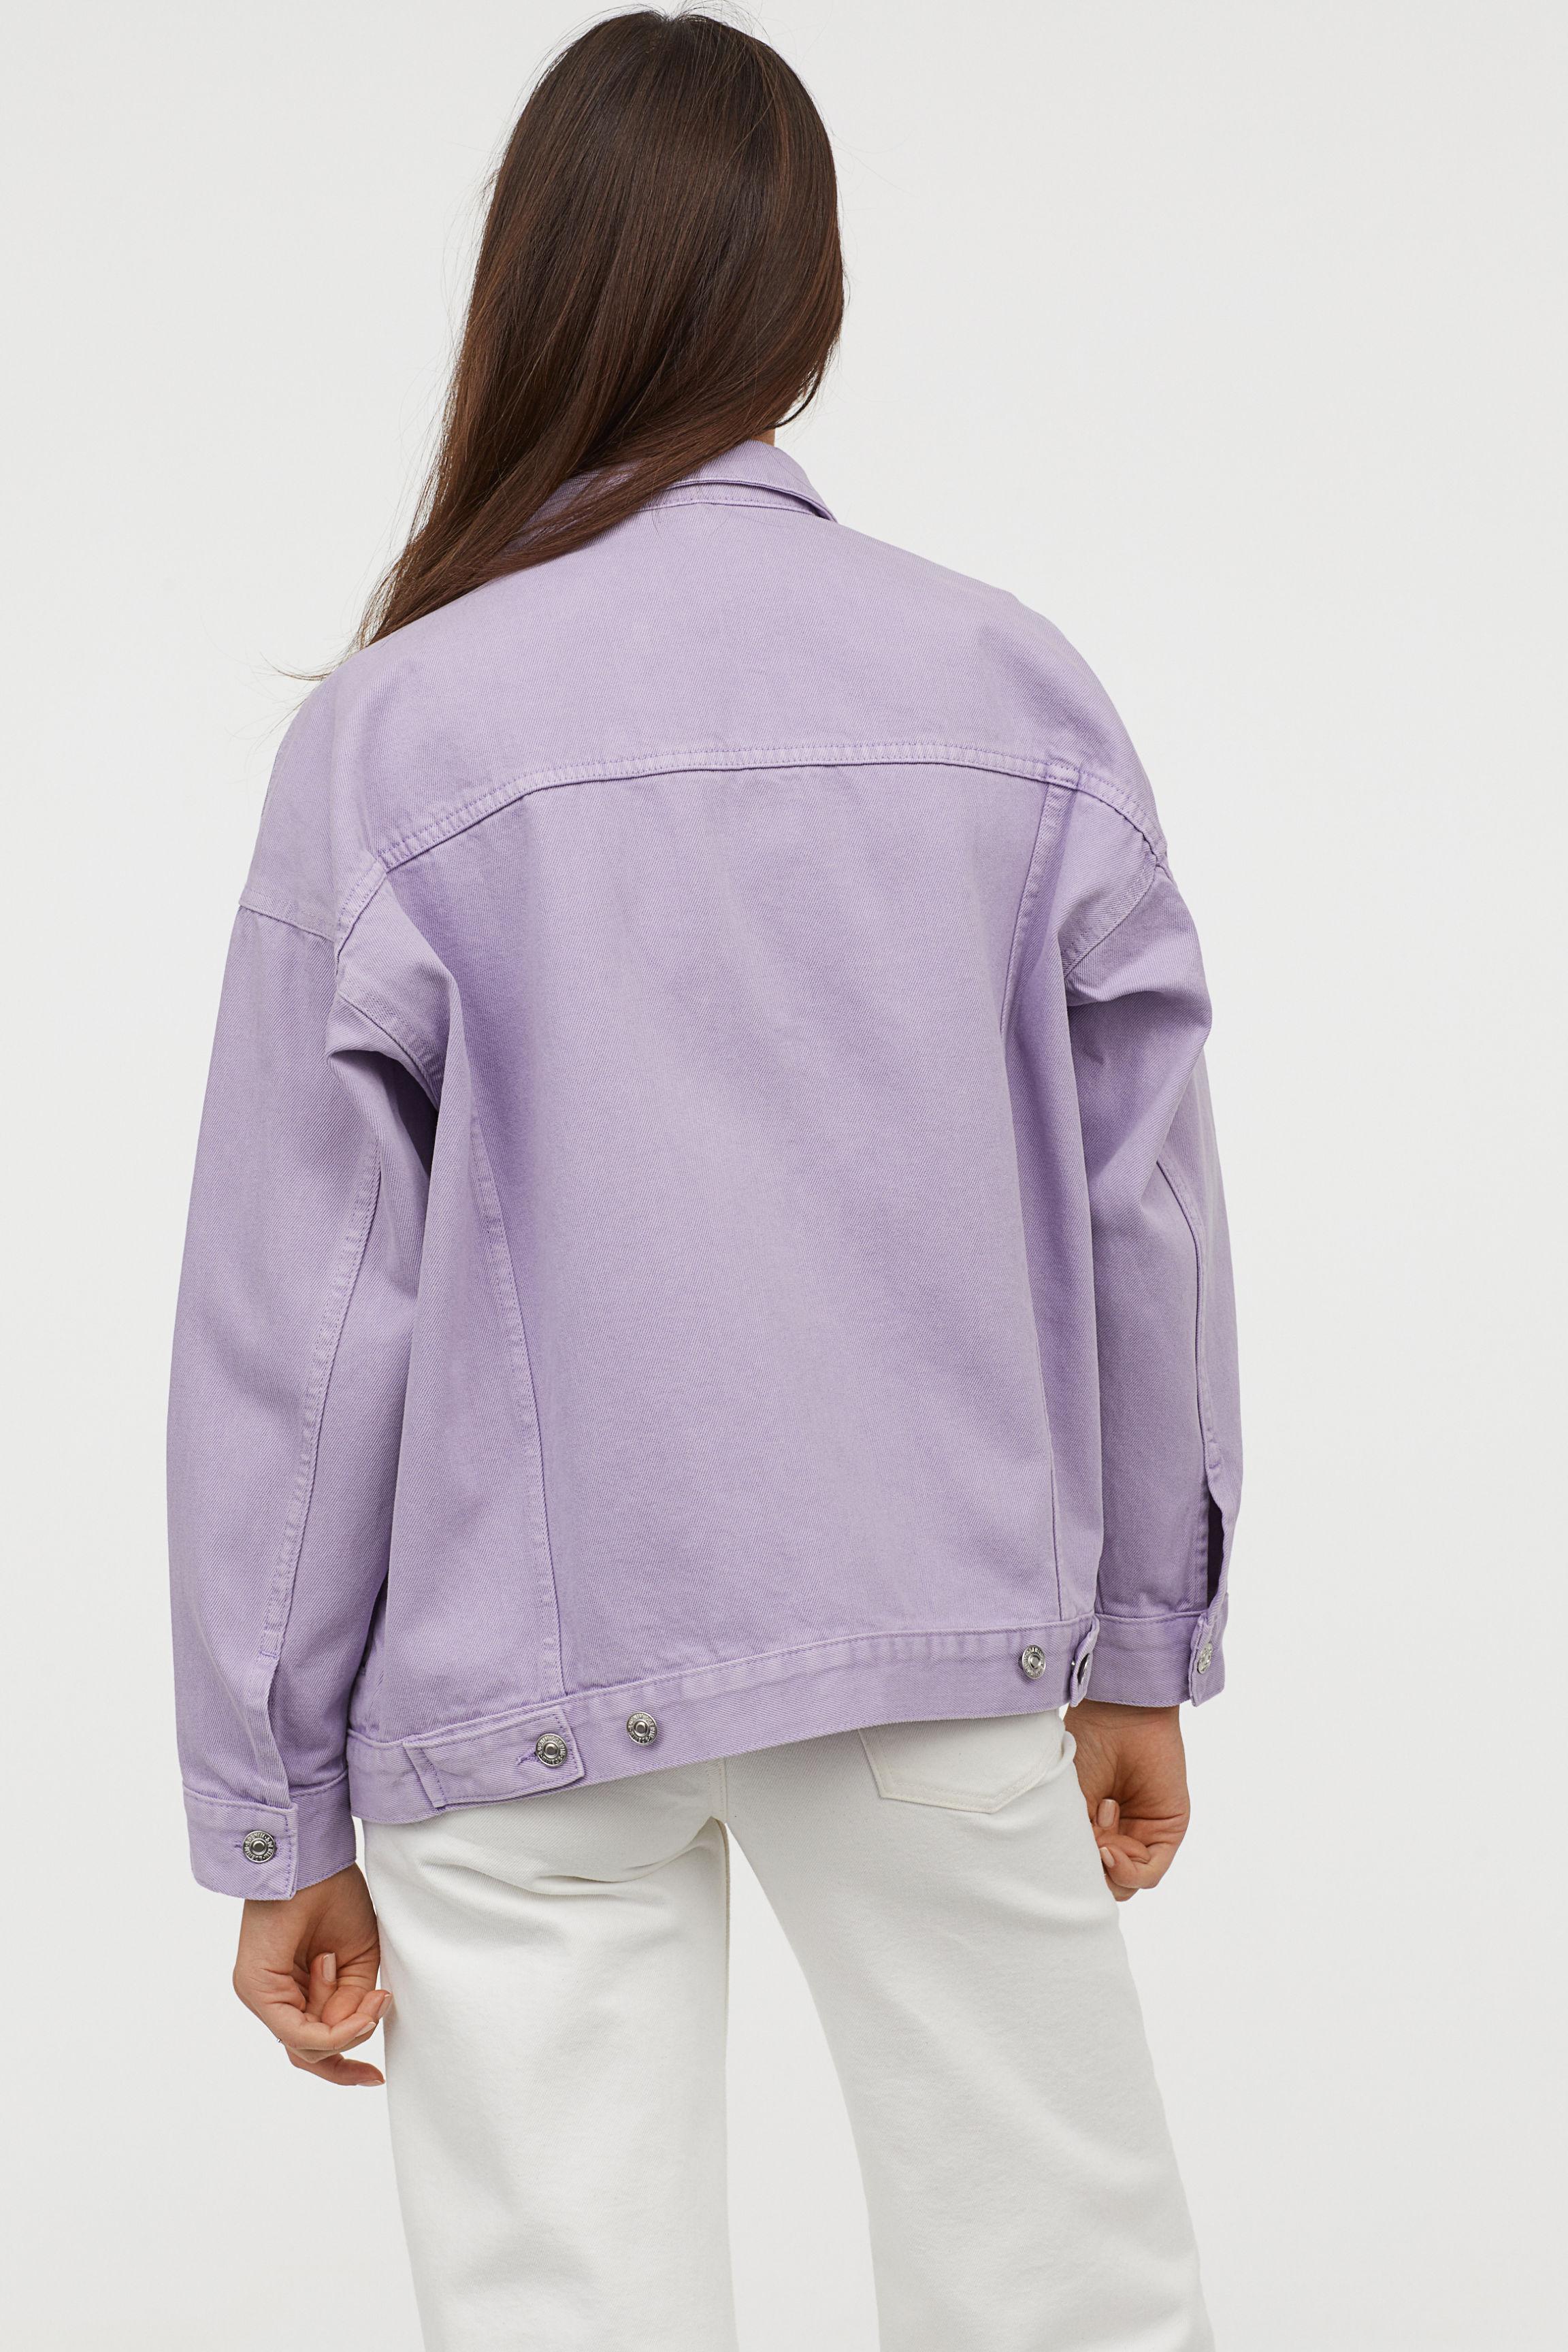 House Also Stupid H&M Oversized Denim Jacket in Purple | Lyst